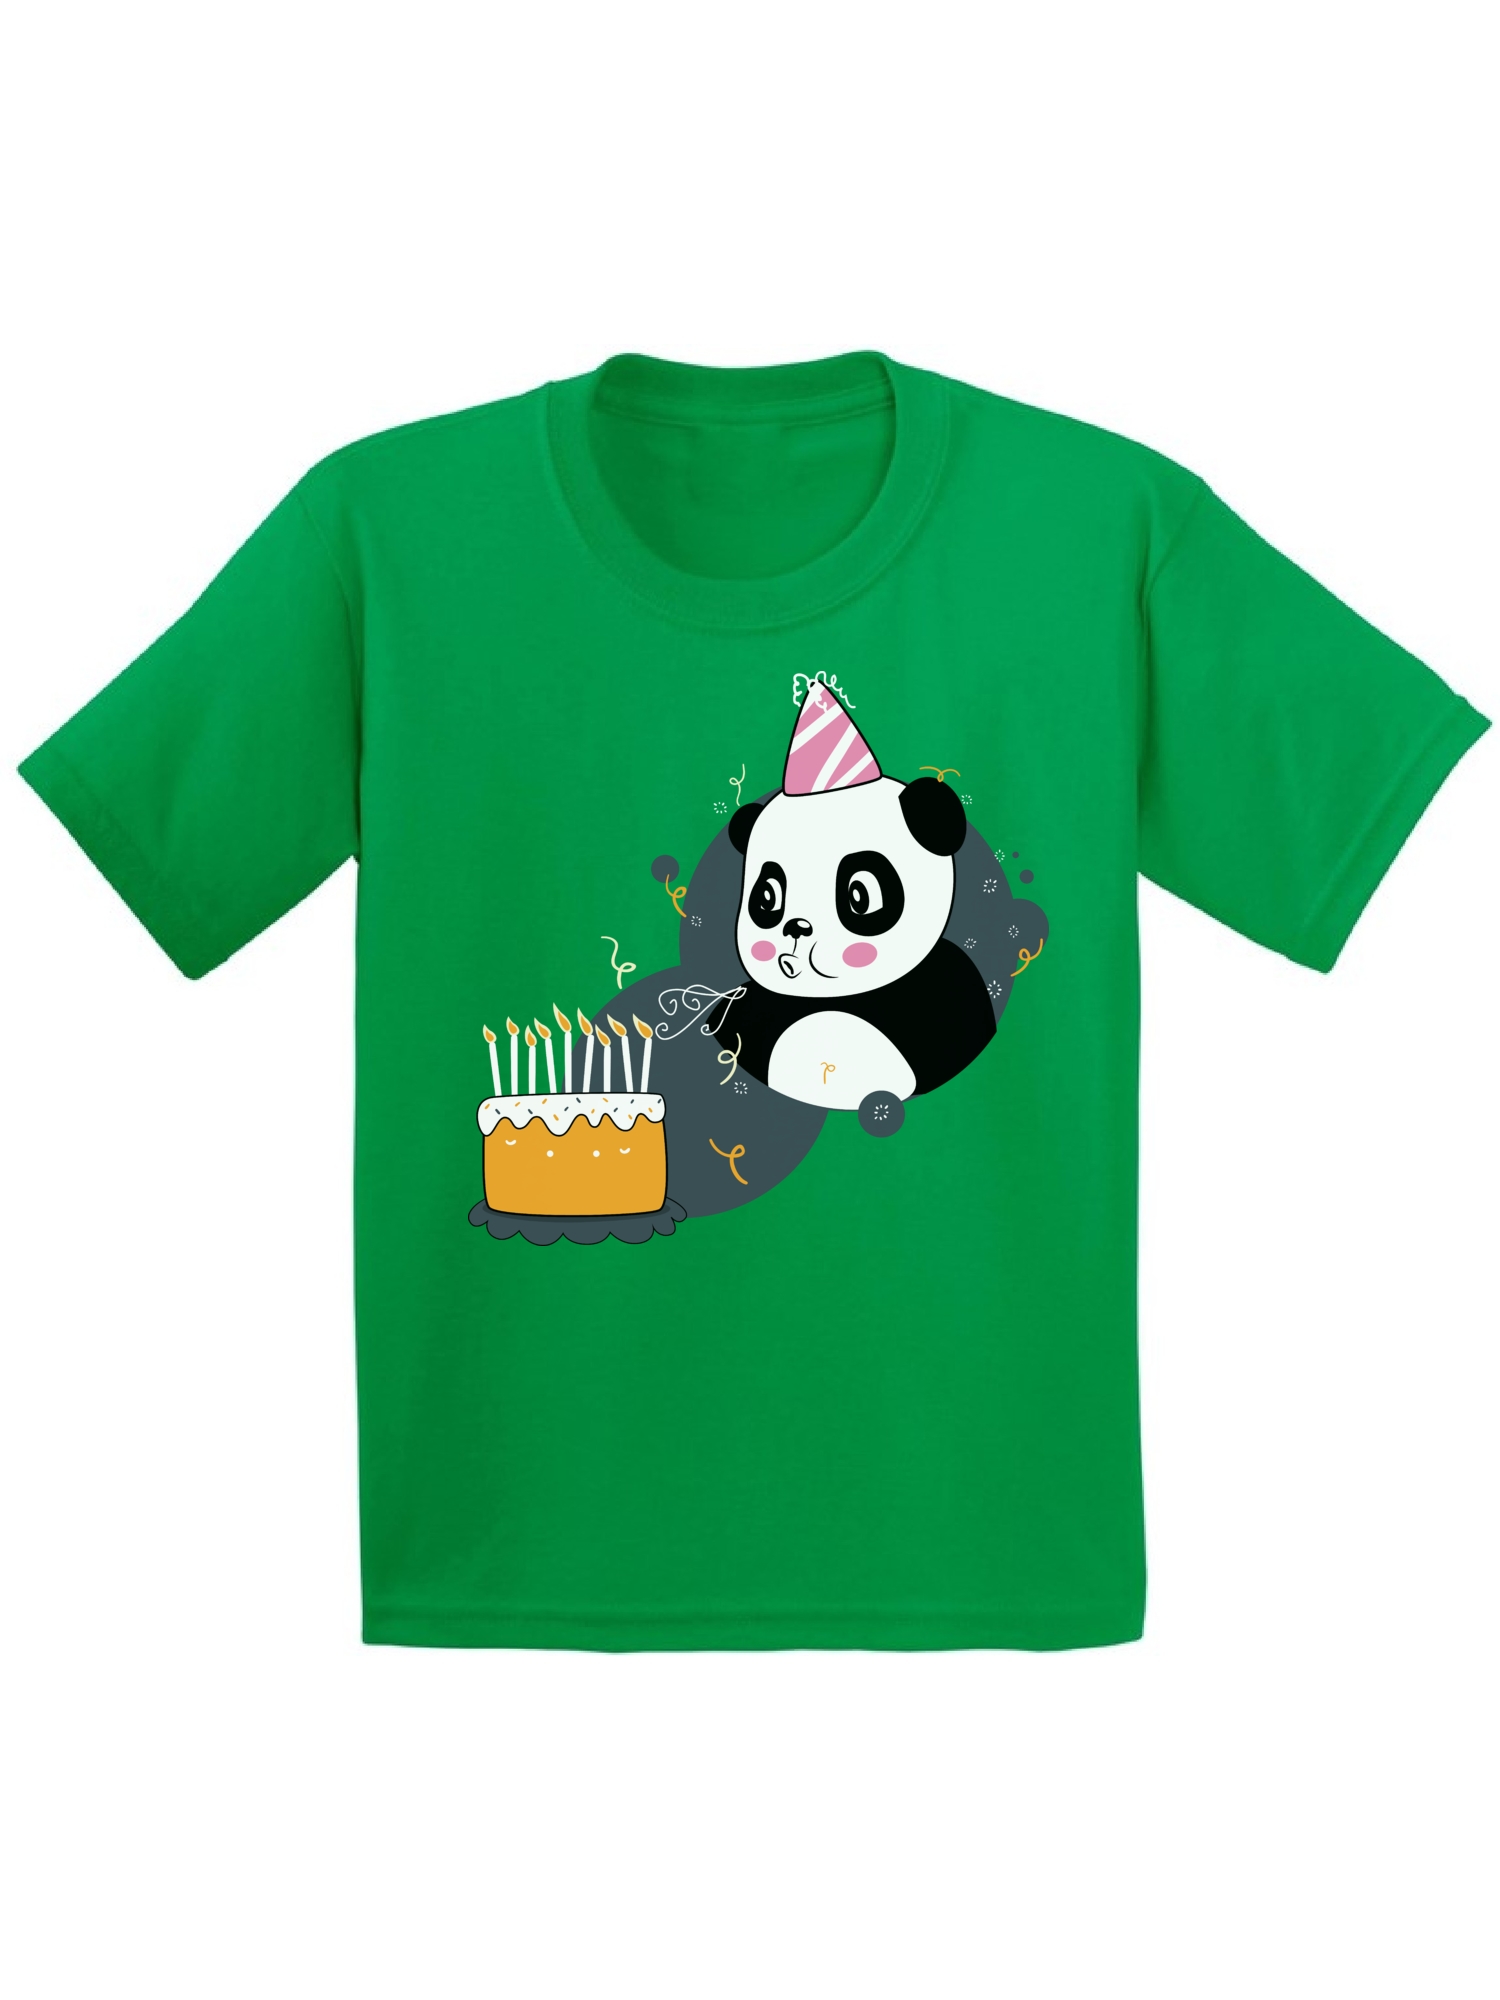 Awkward Styles Panda Birthday Youth Shirt Kids Themed Party Birthday Gifts for Kids Cute Panda with a Birthday Cake Tshirt Funny Birthday Shirts for Boys Funny Birthday Shirts for Girls - image 1 of 4